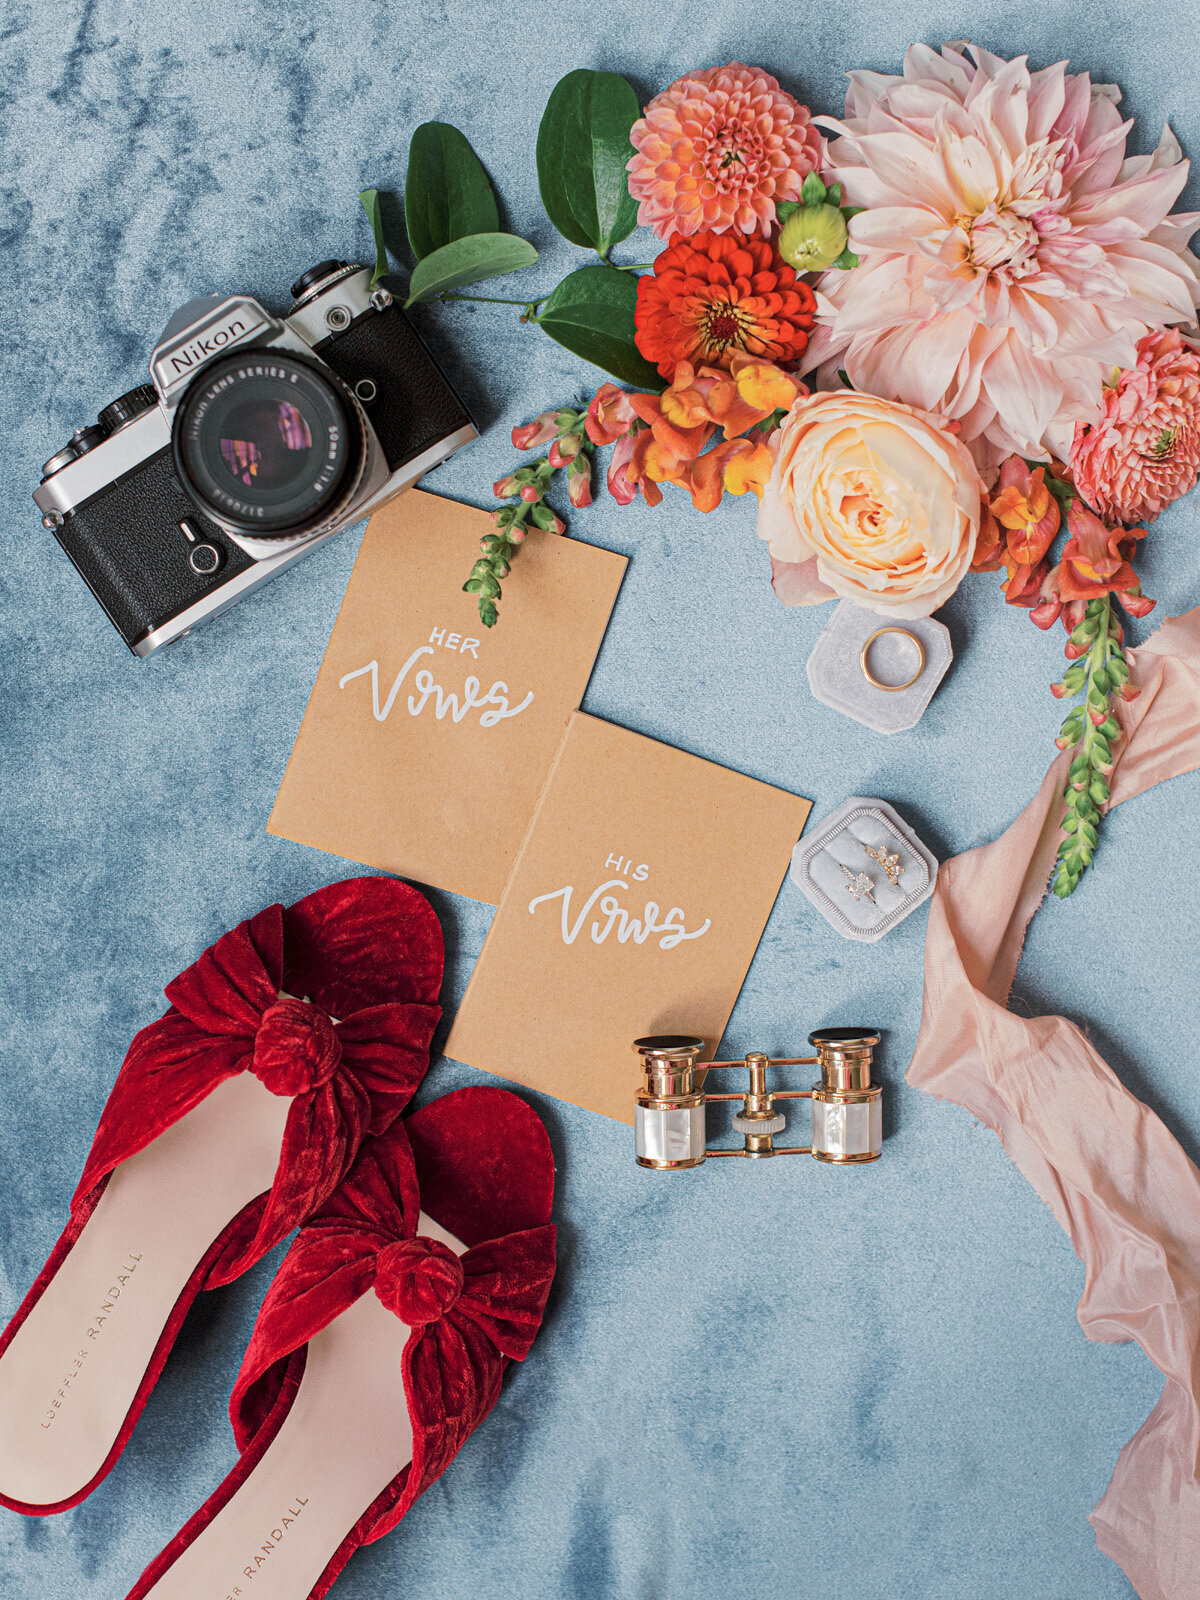 Kate-Murtaugh-Events-elopement-wedding-planner-Boston-Harbor-diamon-engagement-ring-box-destination-vintage-camera-details